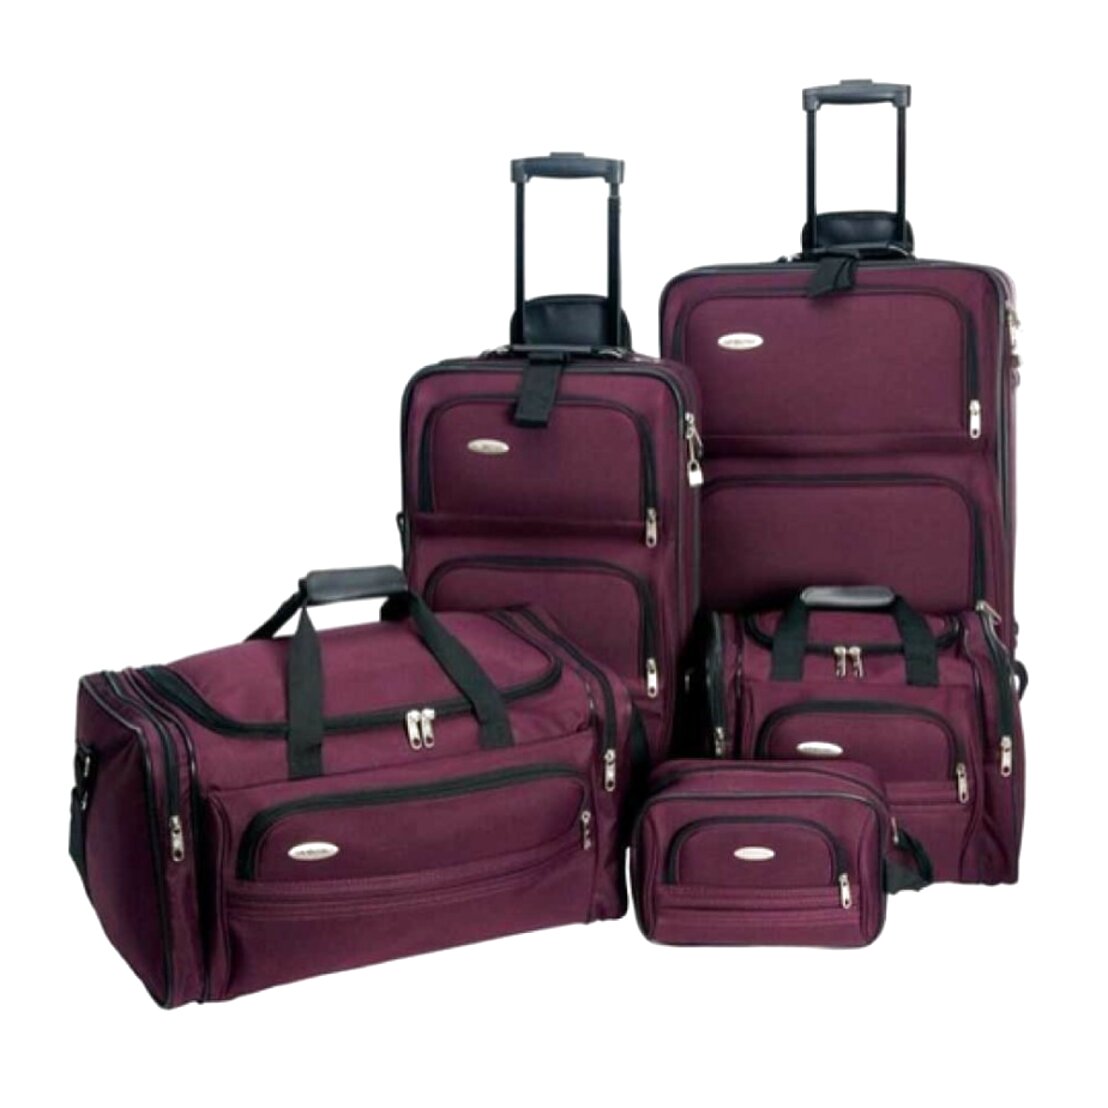 Samsonite Luggage Set for sale in UK | 60 used Samsonite Luggage Sets